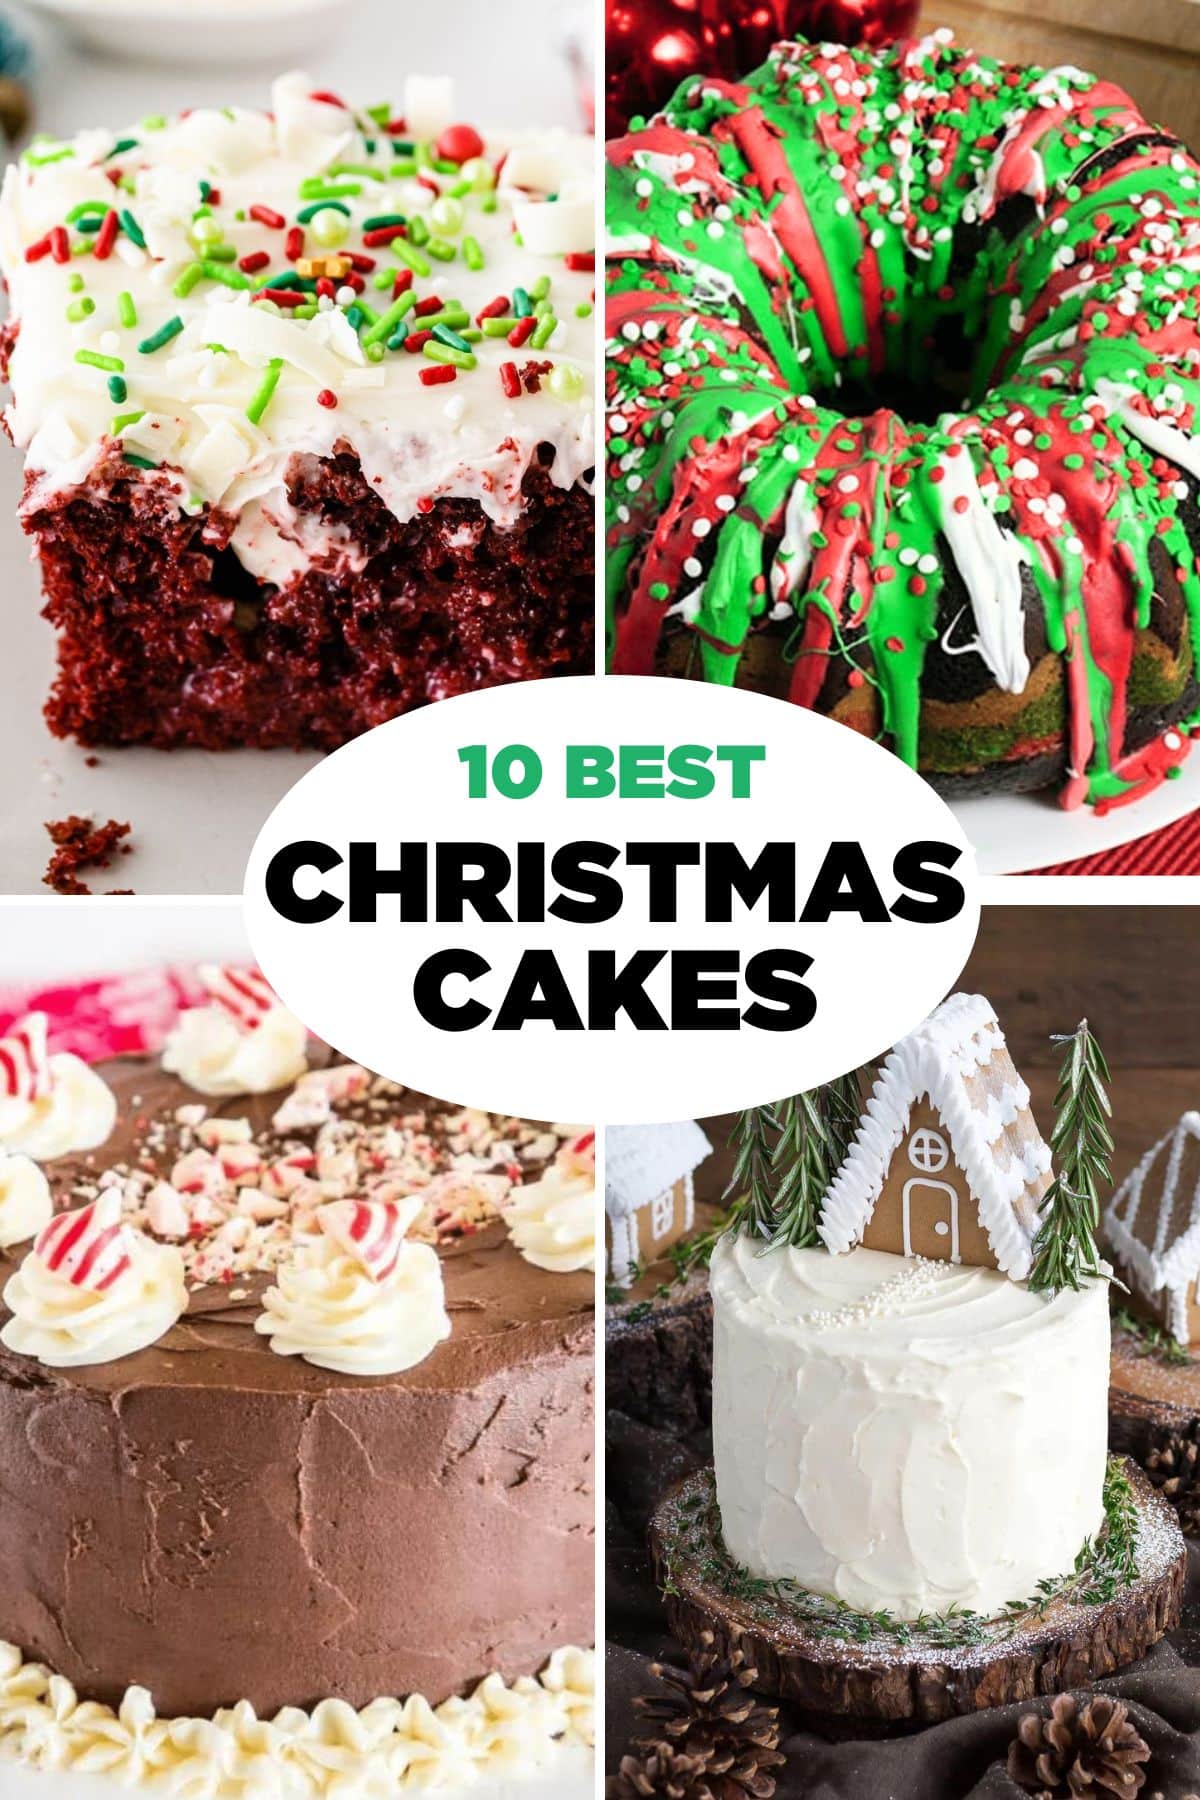 Top 10 Christmas cakes.